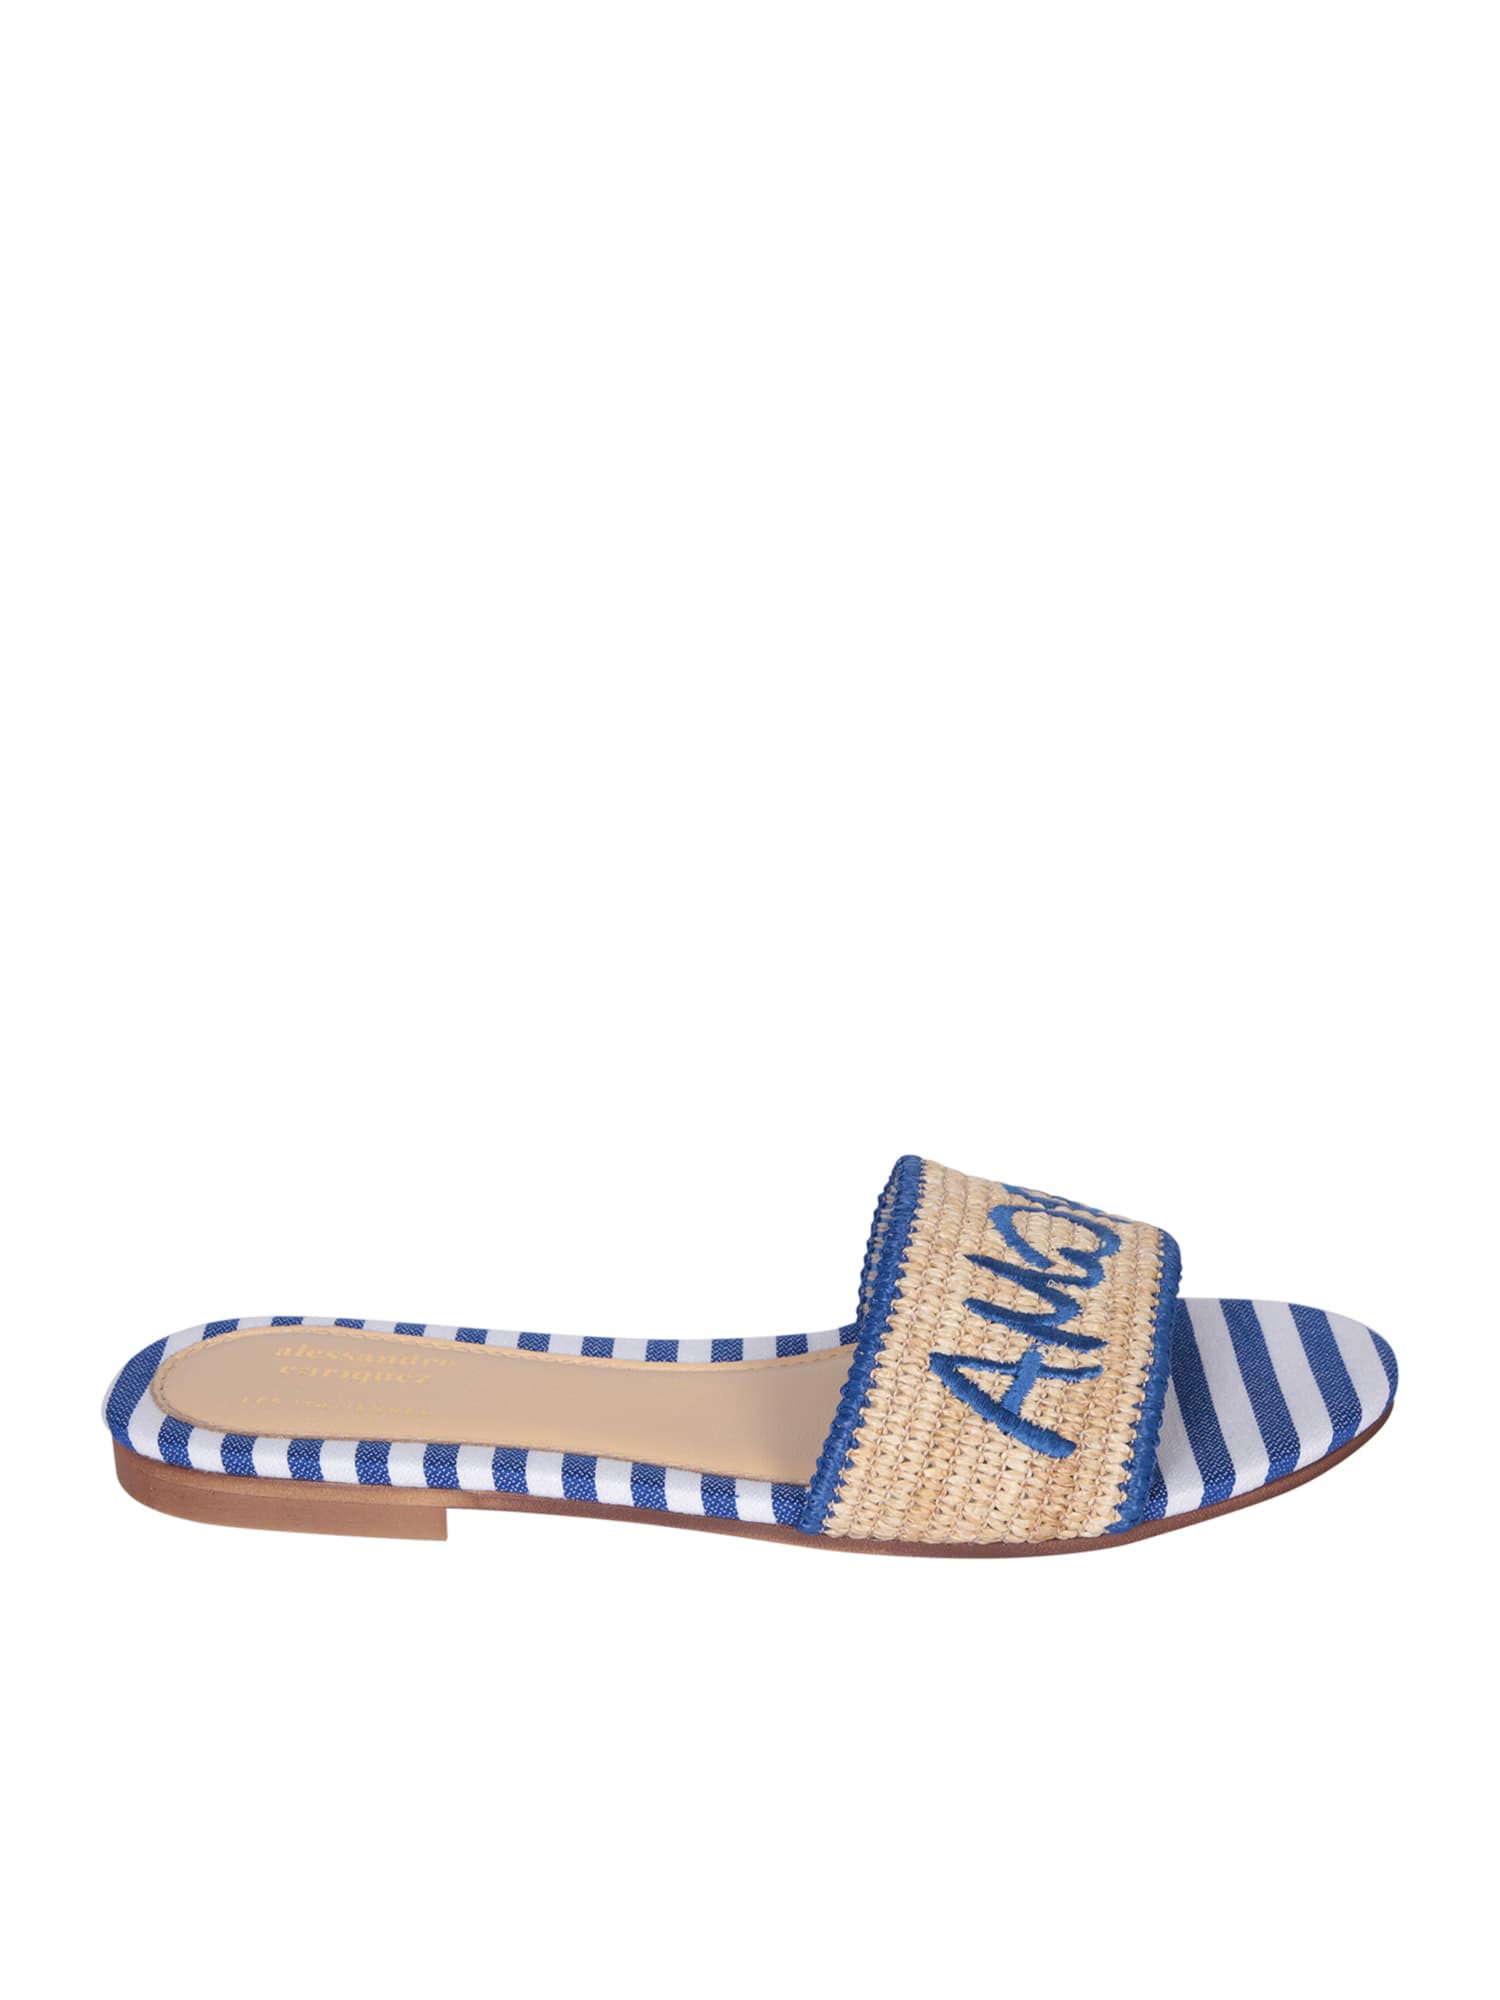 Shop Alessandro Enriquez Amore Bei Blu Raffia And Fabric Sandals In Beige